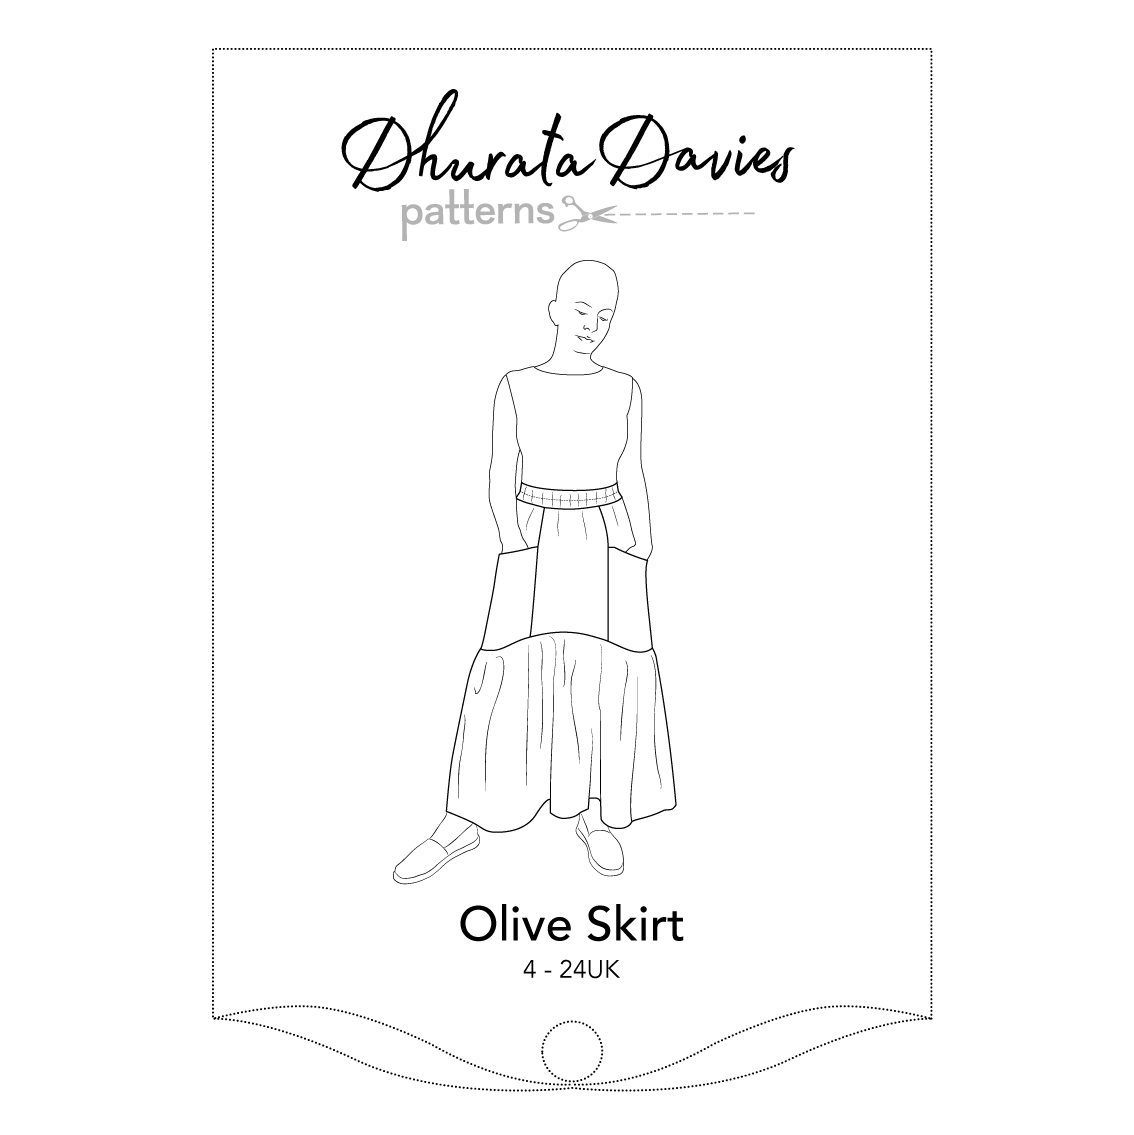 Dhurata Davies Patterns Olive Skirt